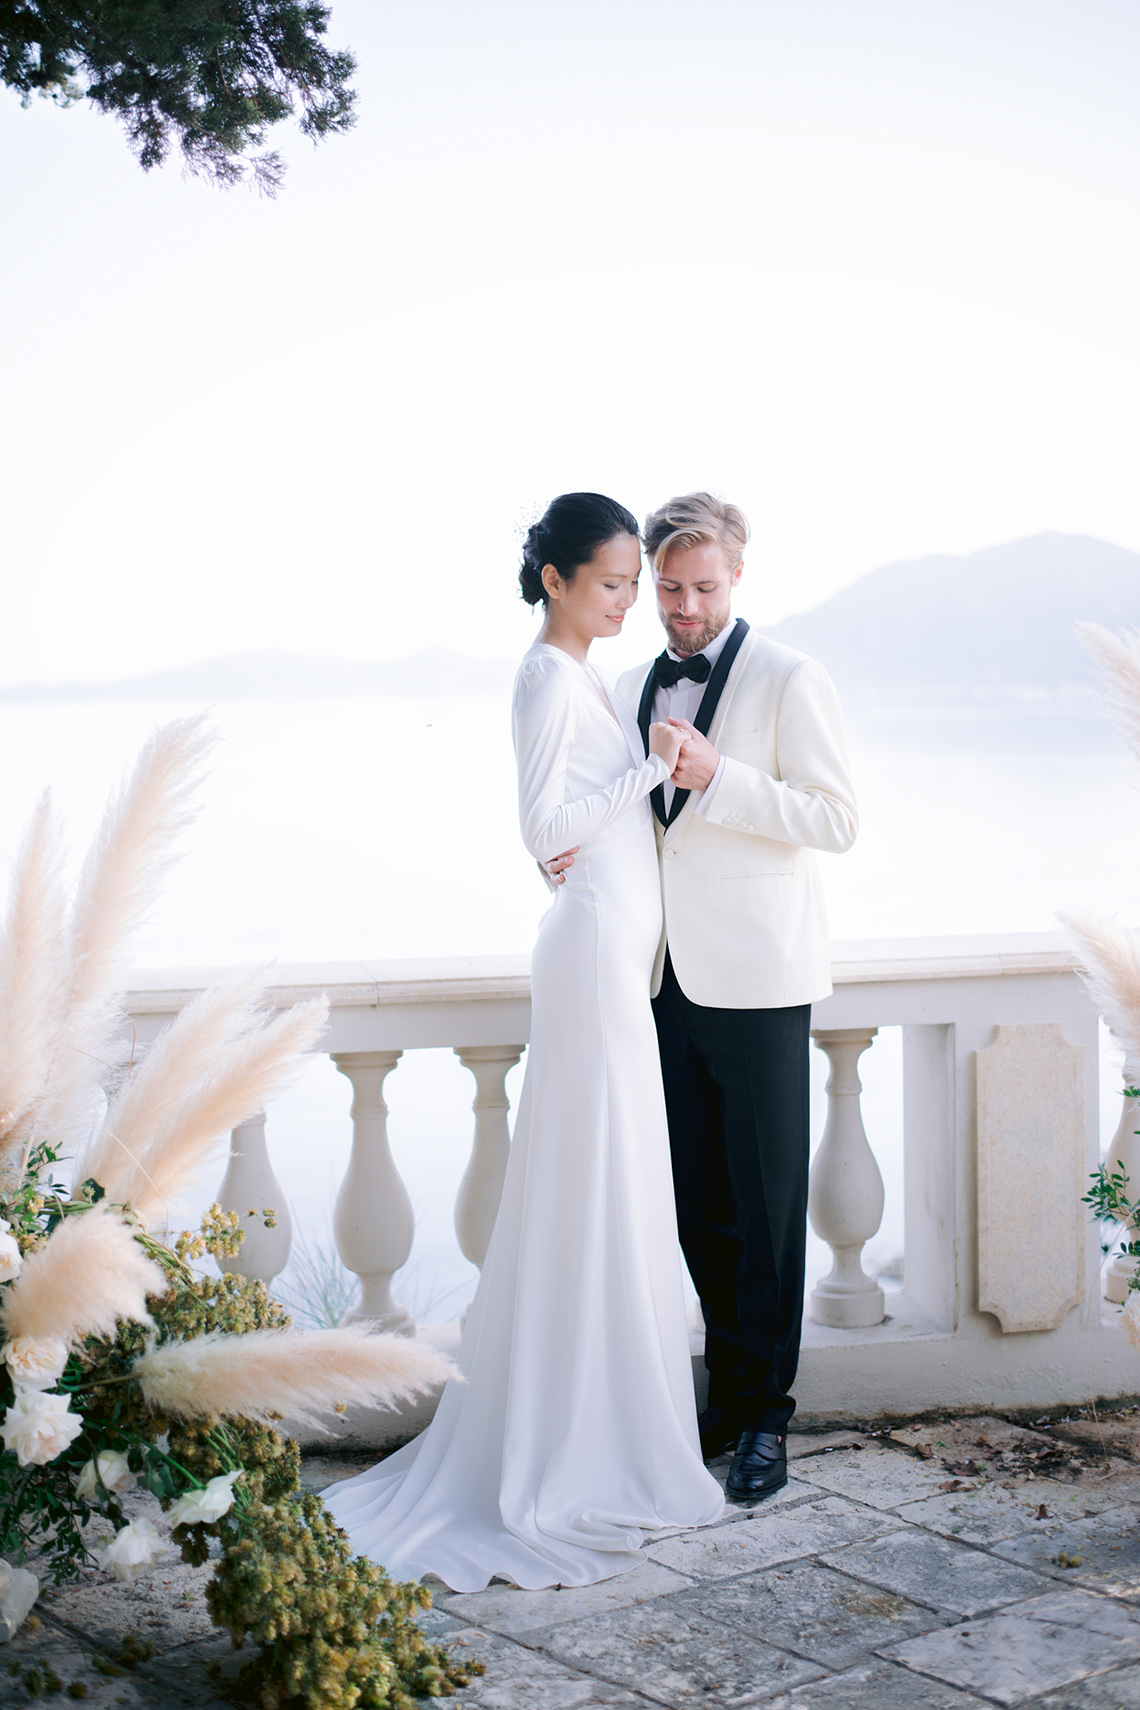 Modern Fashion-Forward Black White and Pink Greek Wedding Inspiration – Panos Demiropoulos 39